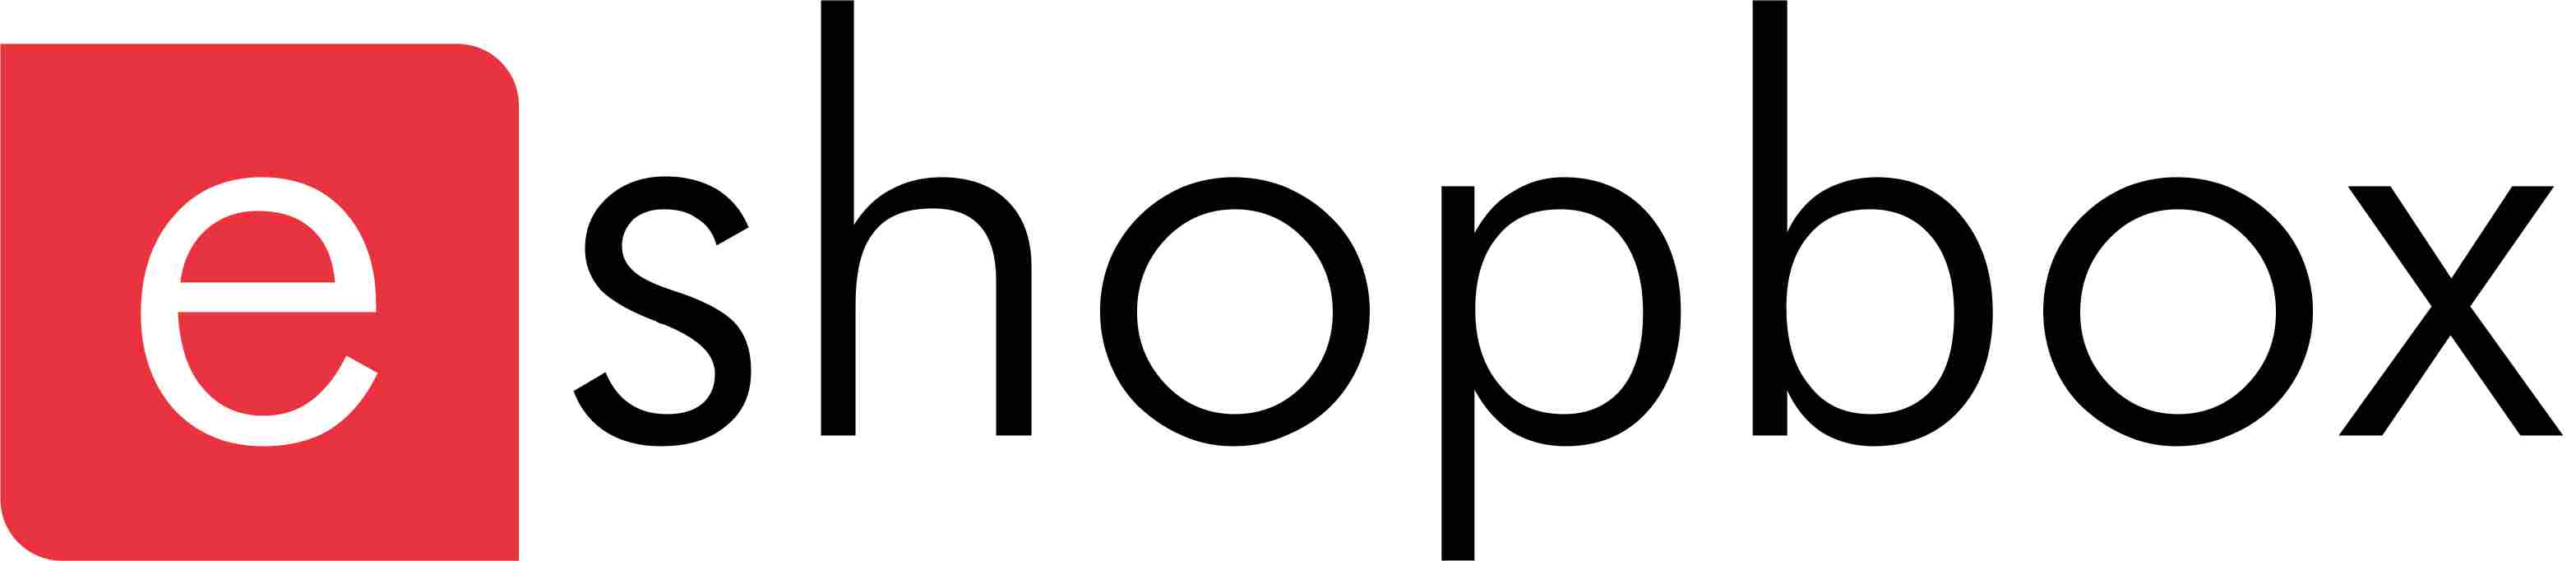 Eshopbox e-commerce Pvt Ltd